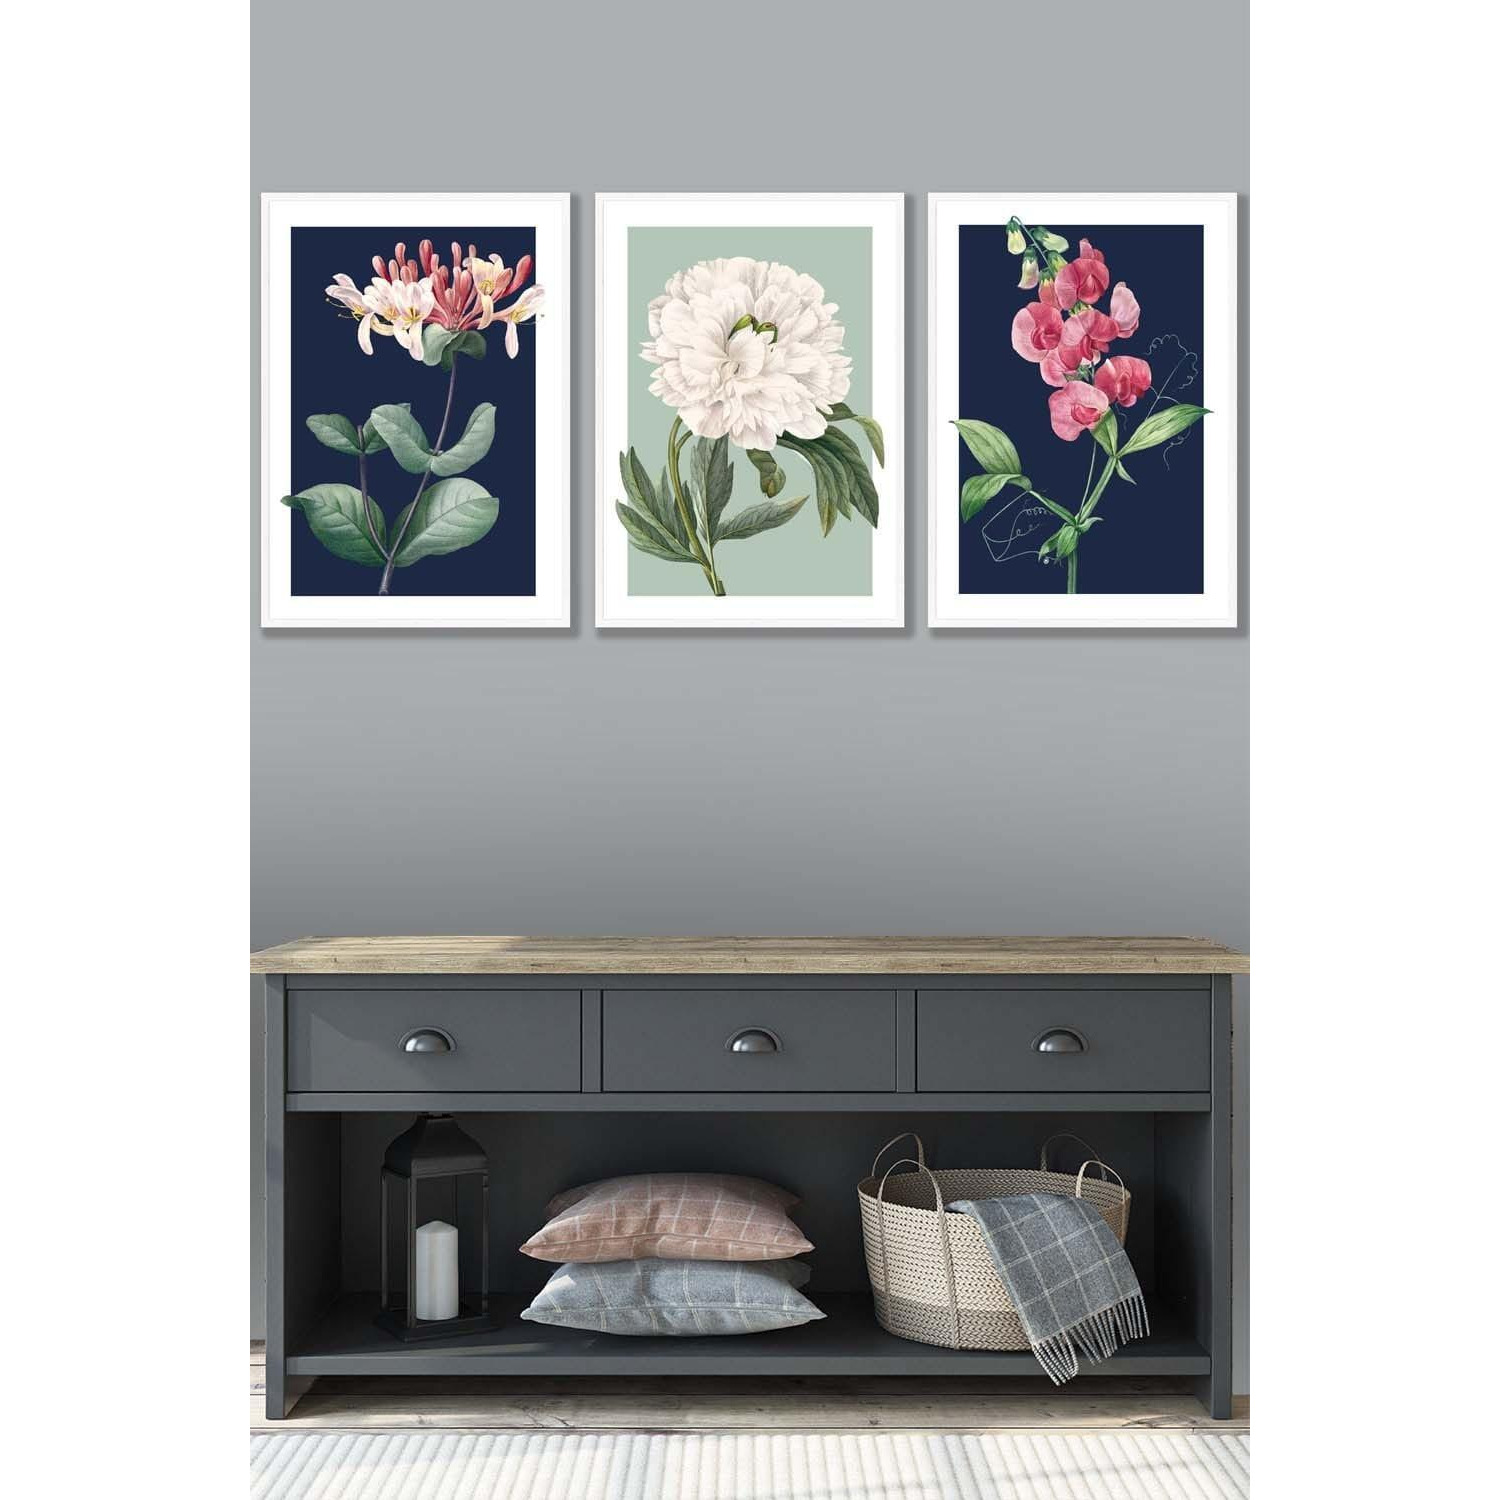 Set of 3 White Framed Vintage Flowers Honeysuckle Blue and Green Wall Art - image 1